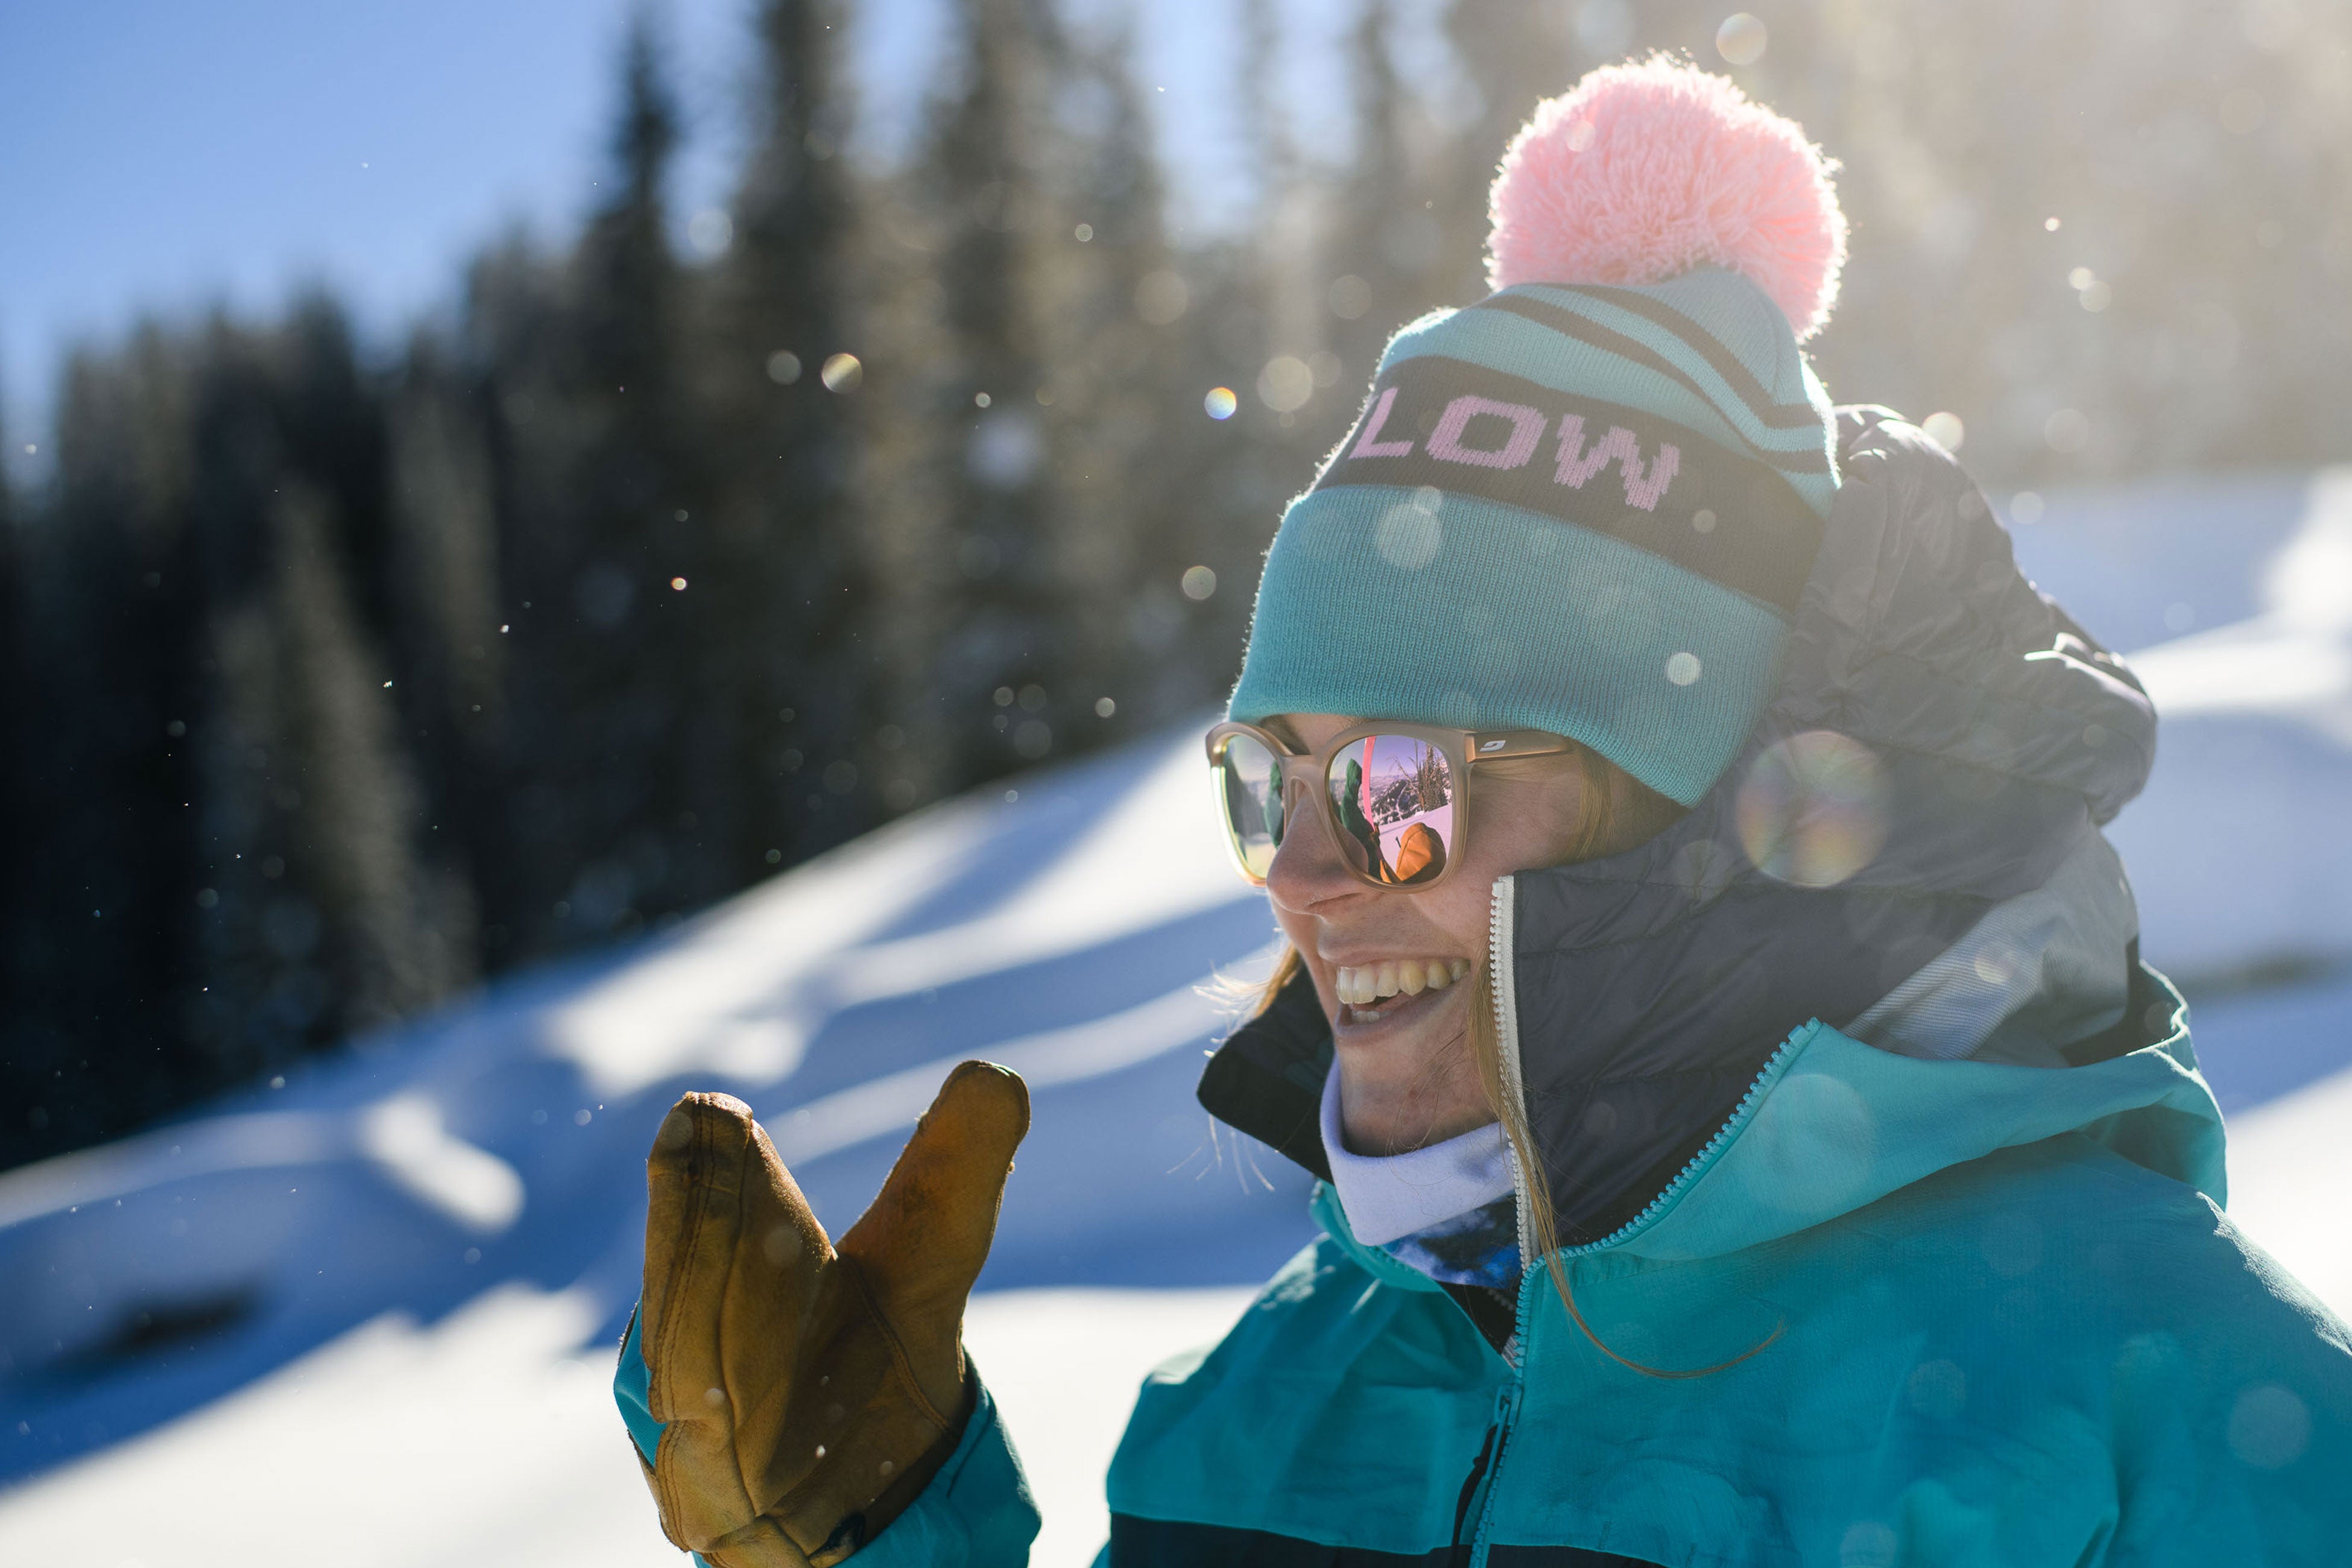 Julbo Athlete Wears Glasses for Backcountry Skiing